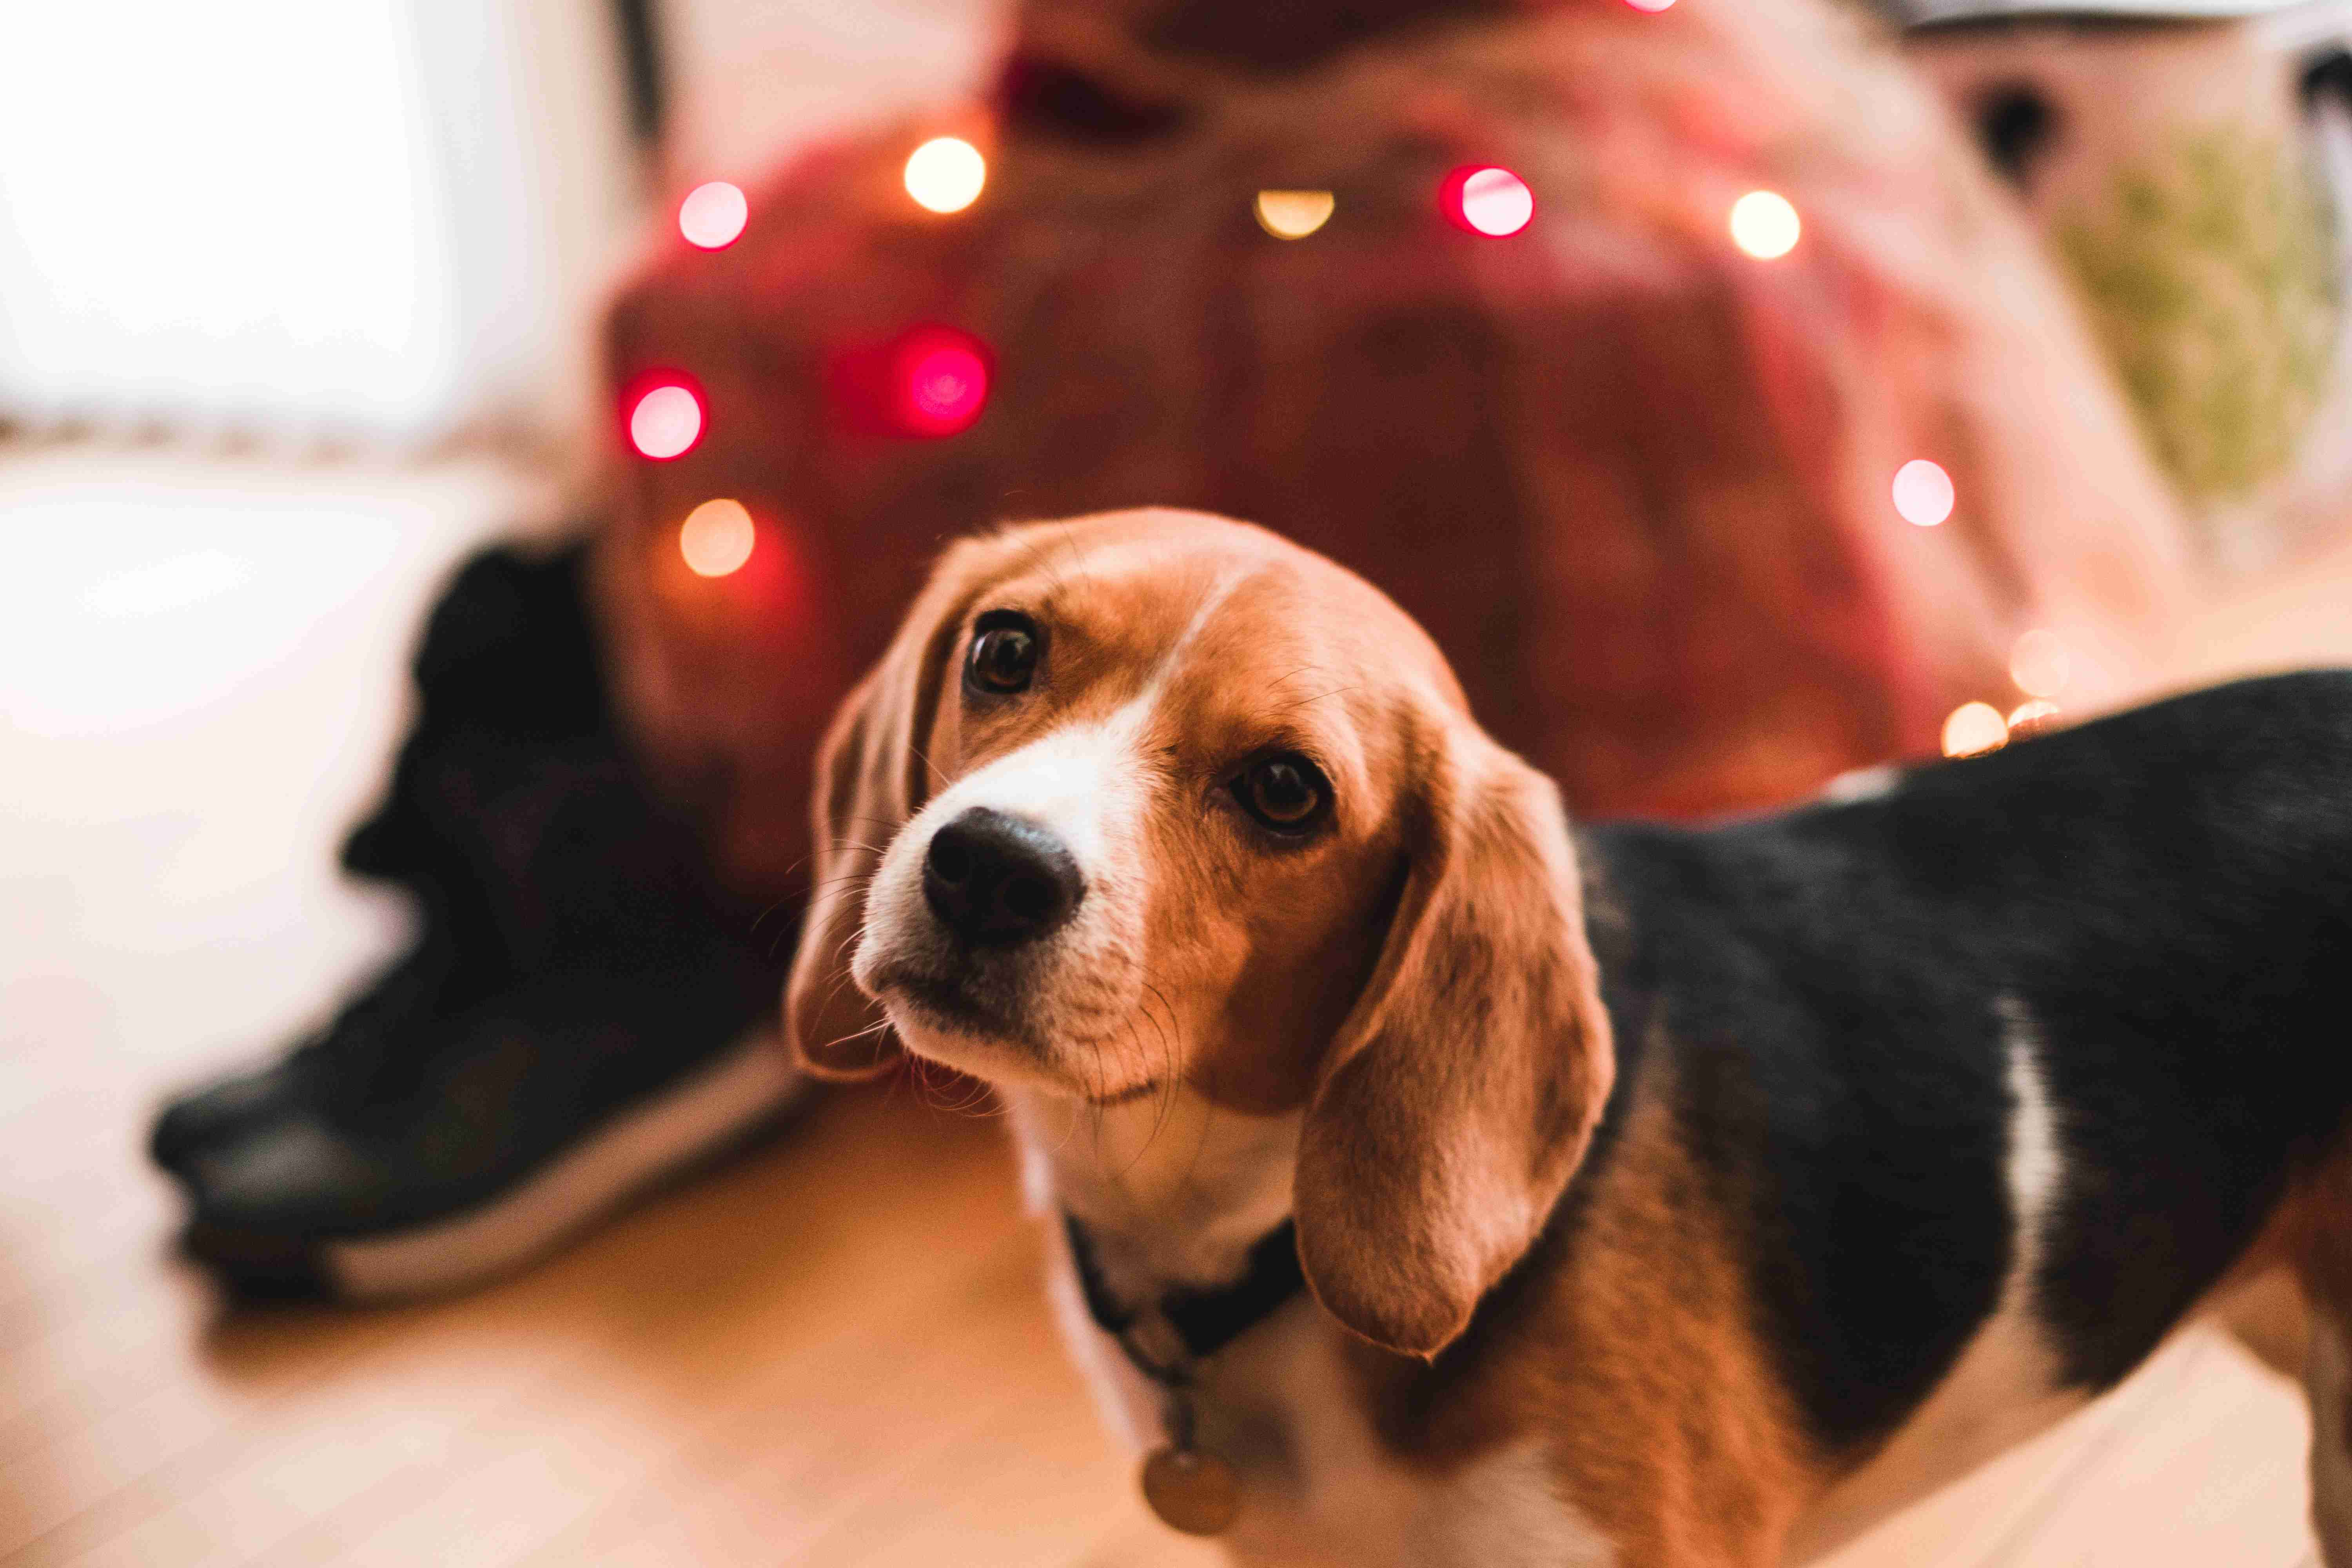 Beagle Sleep Requirements: How Much Sleep Does Your Beagle Need?